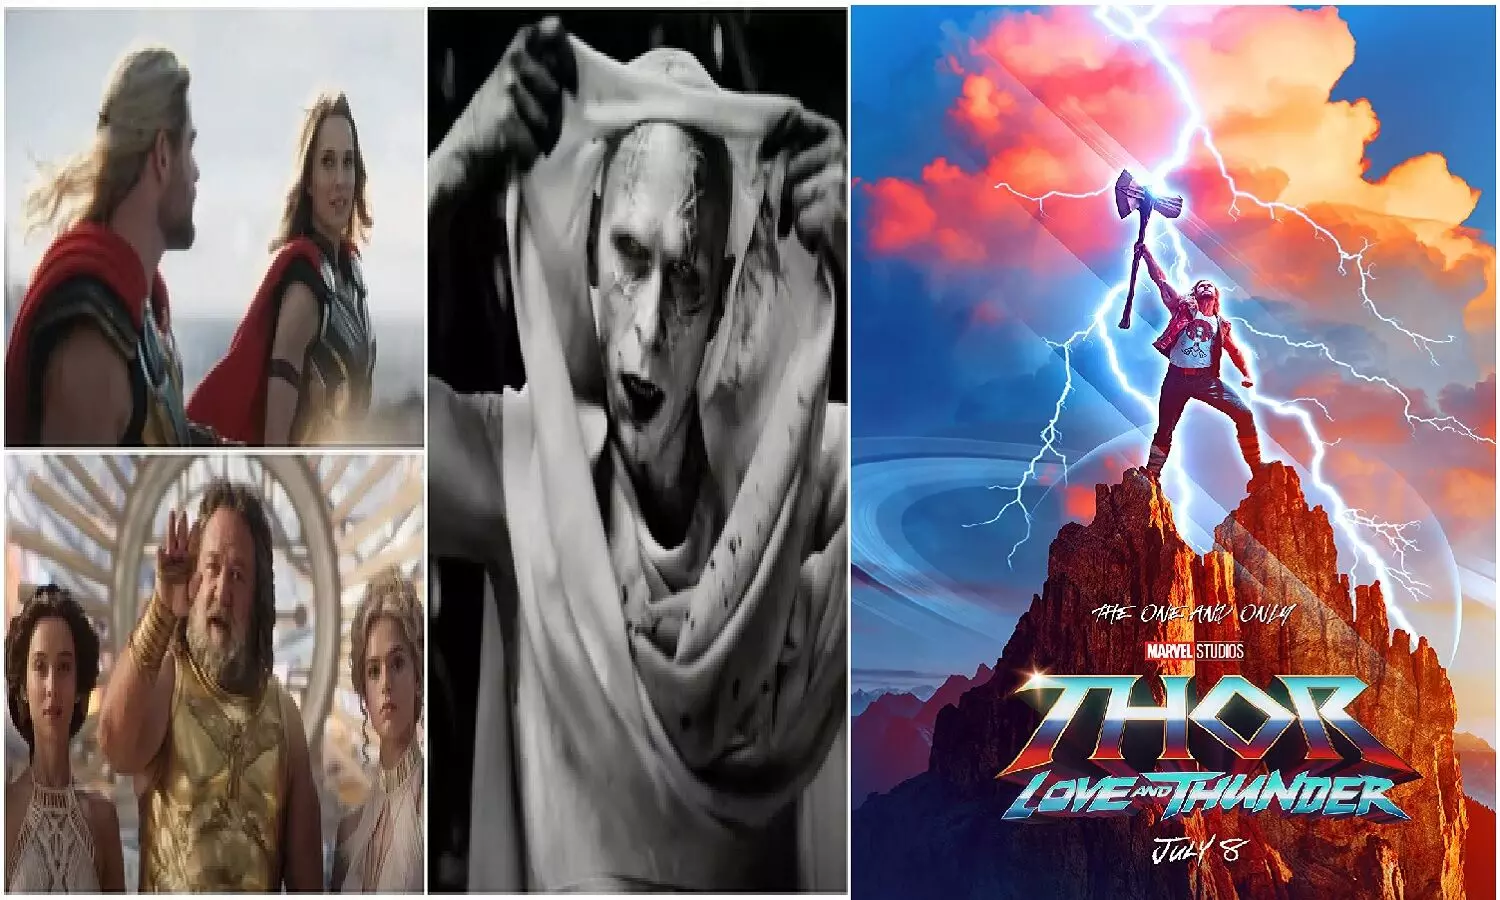 Thor Love And Thunder Trailer Review: थॉर लव एंड थंडर ट्रेलर रिव्यू